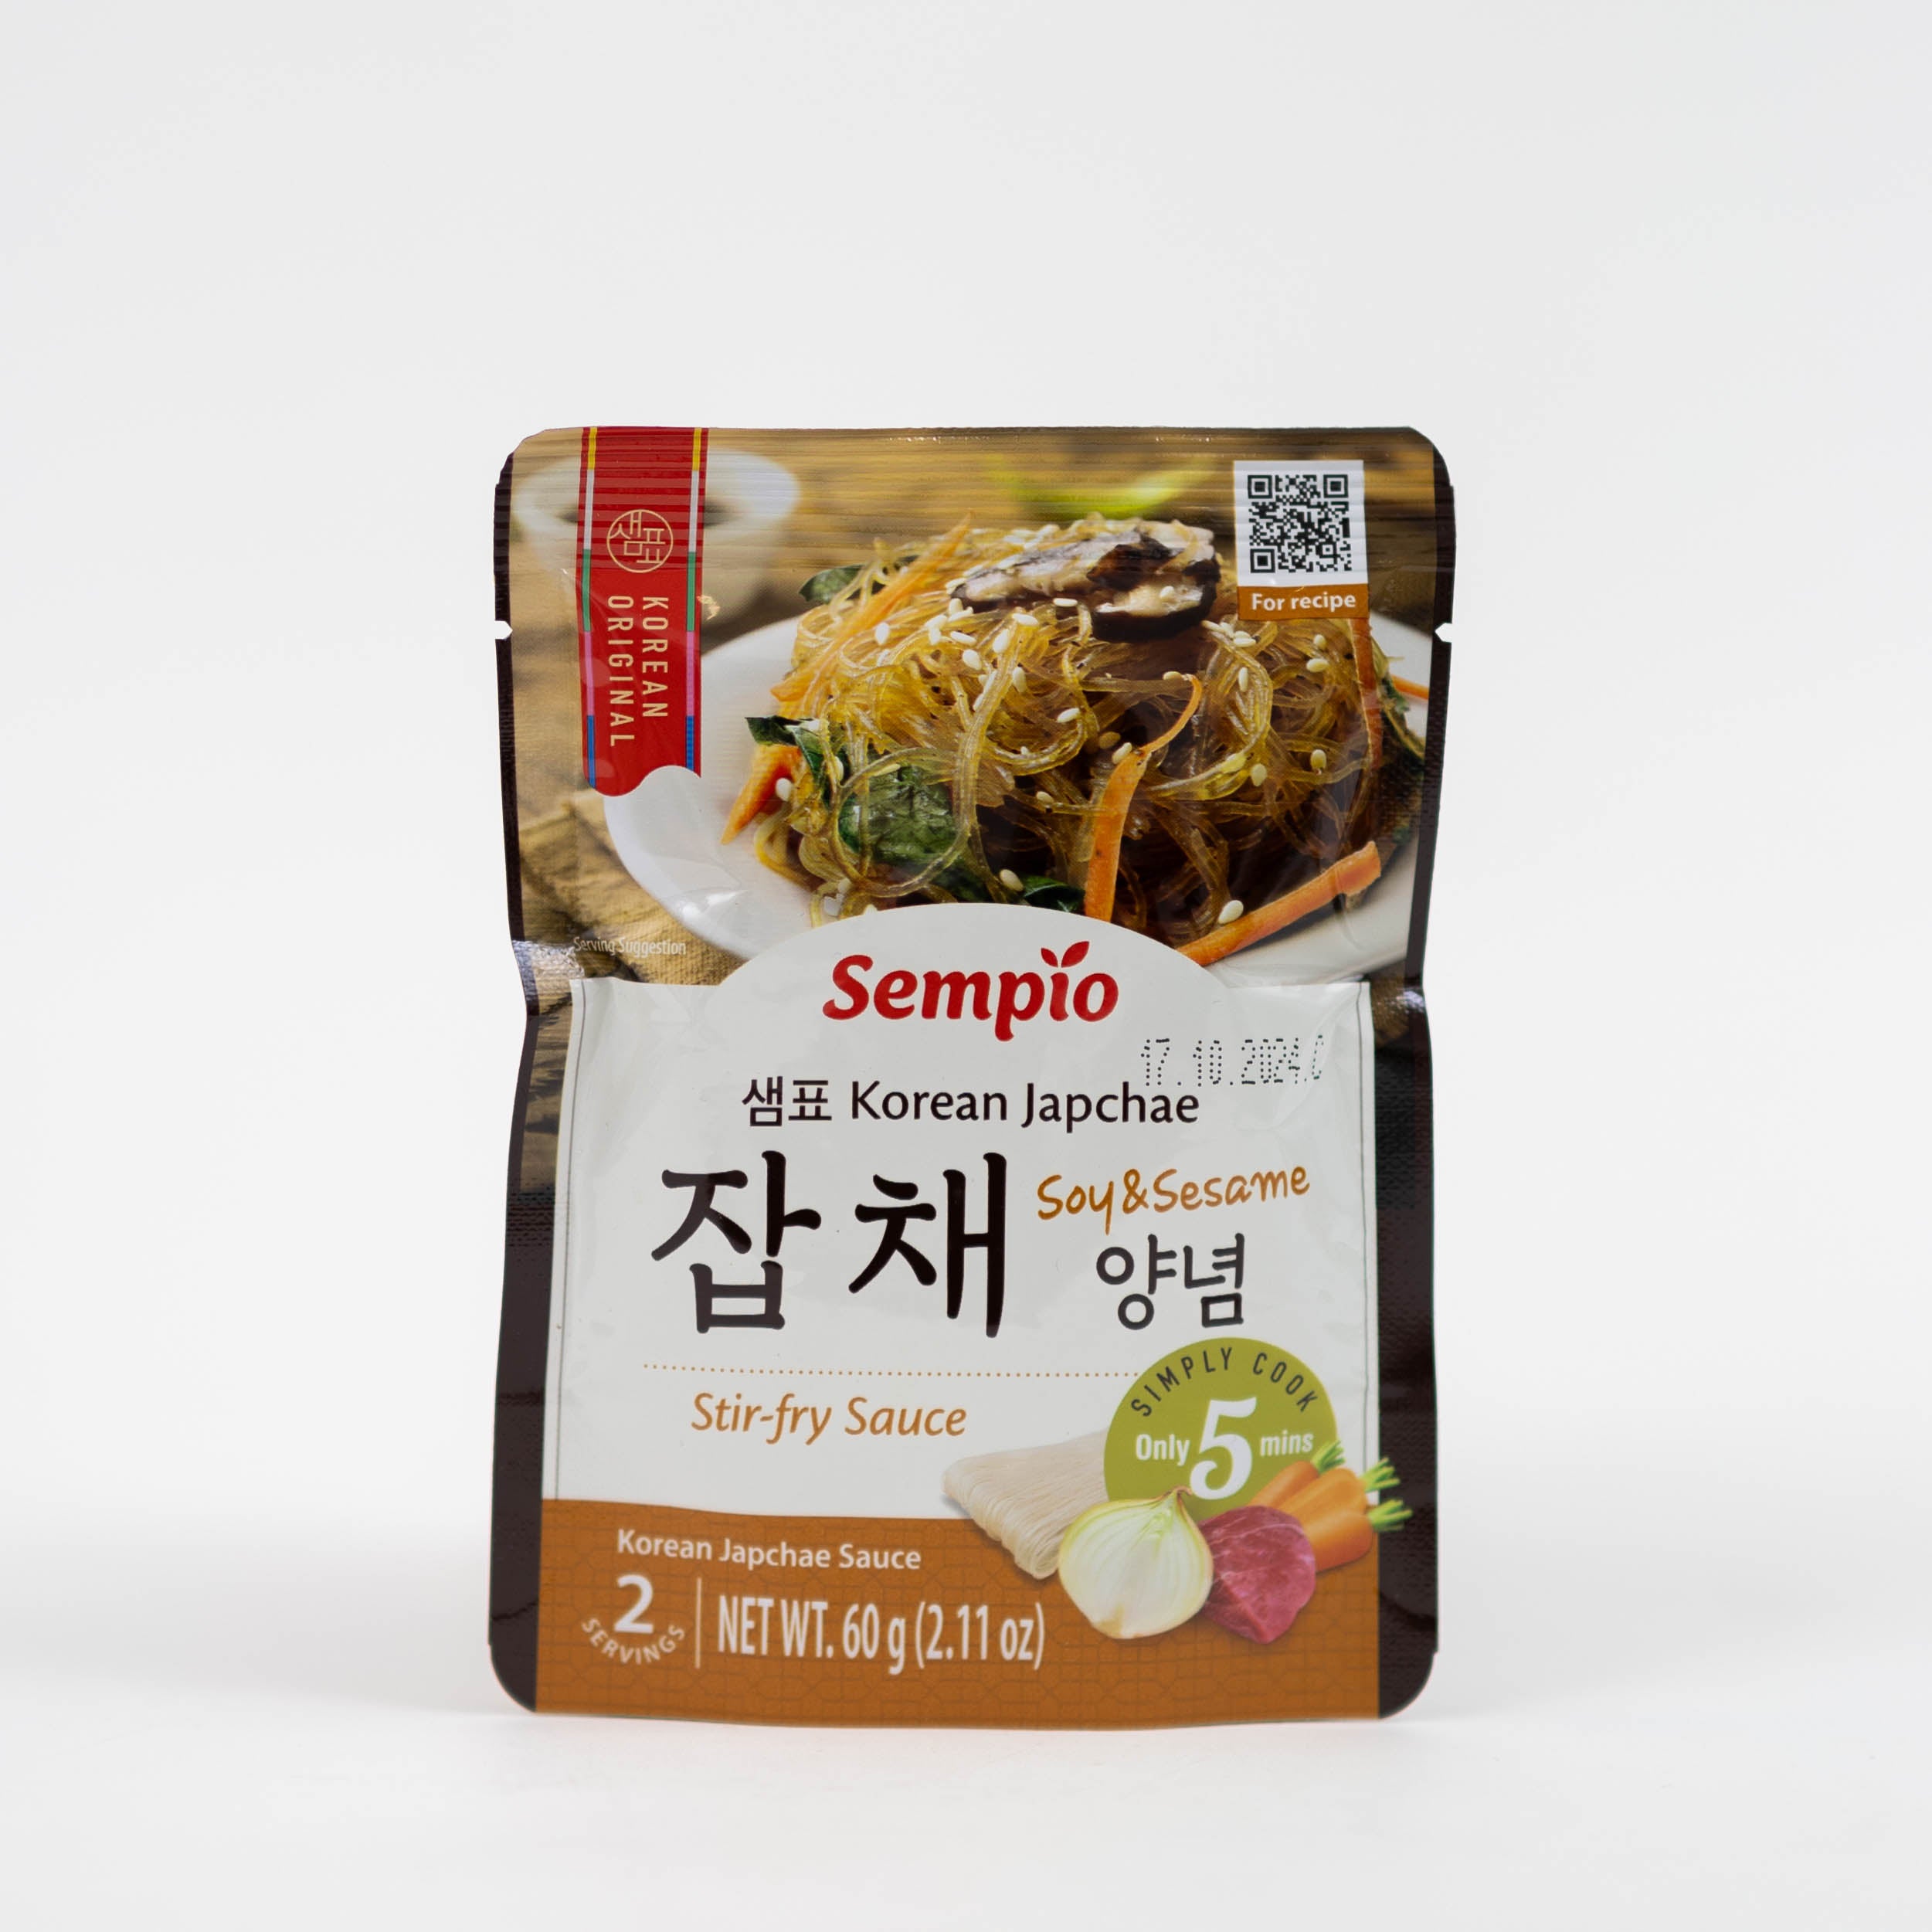 dinese.de sempio korean japchae soy sesame stir fry sauce asiatische soßen lebensmittel onlineshop asia shop asiashop